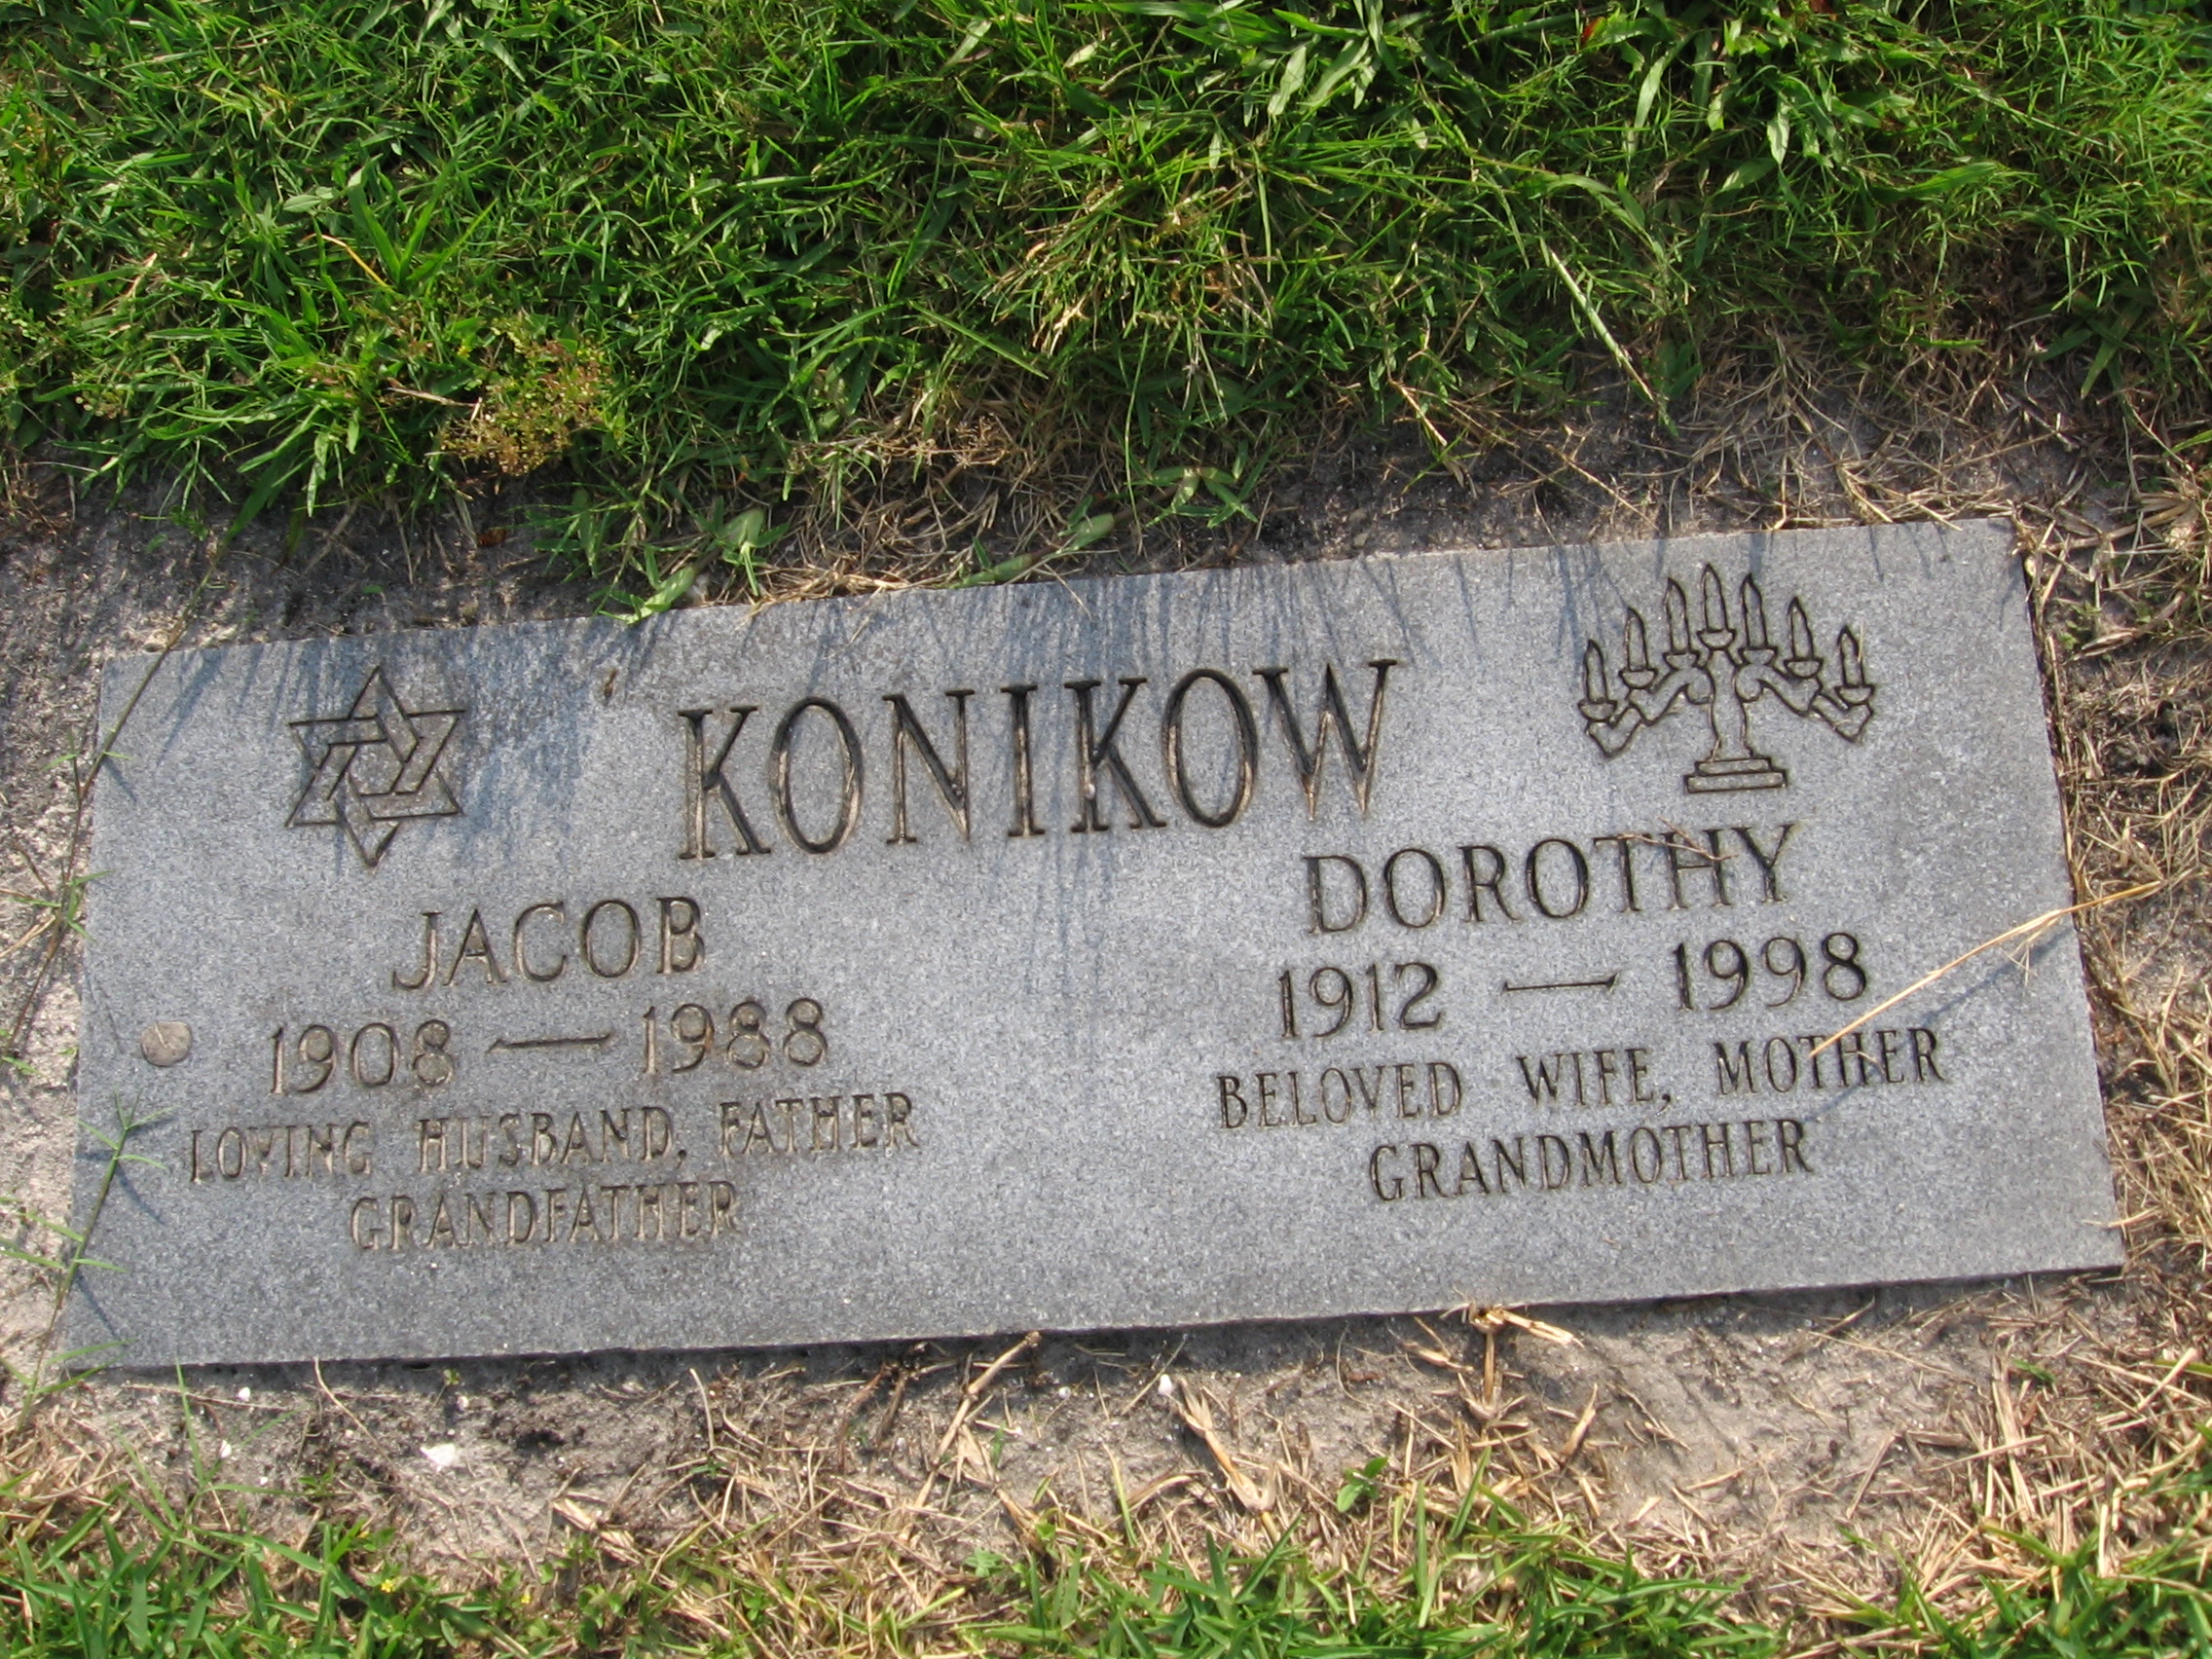 Dorothy Konikow